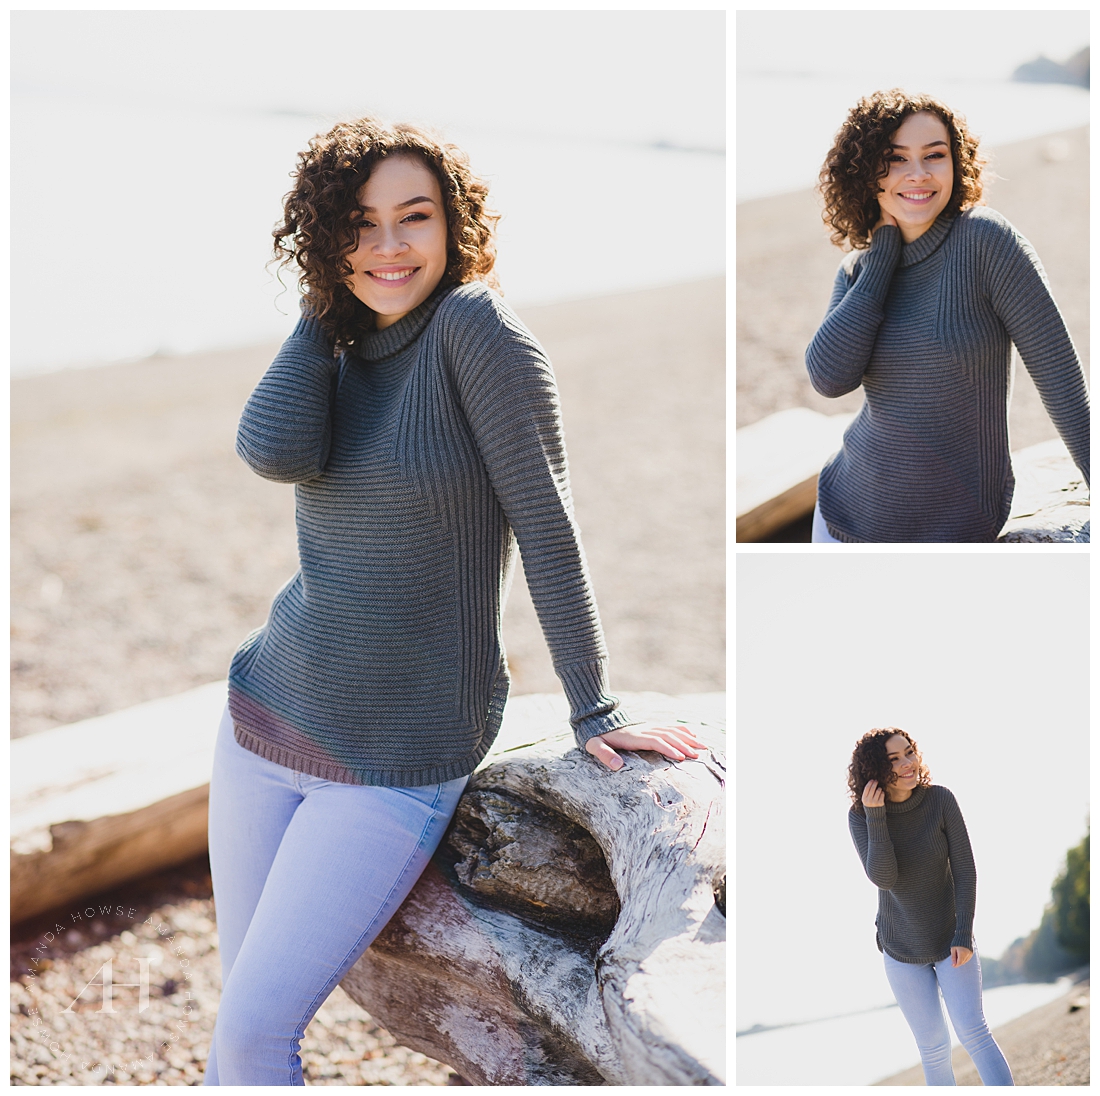 Cozy Outfit Ideas for Fall Senior Portraits on the Beach | Washington Senior Portrait Photographer Amanda Howse